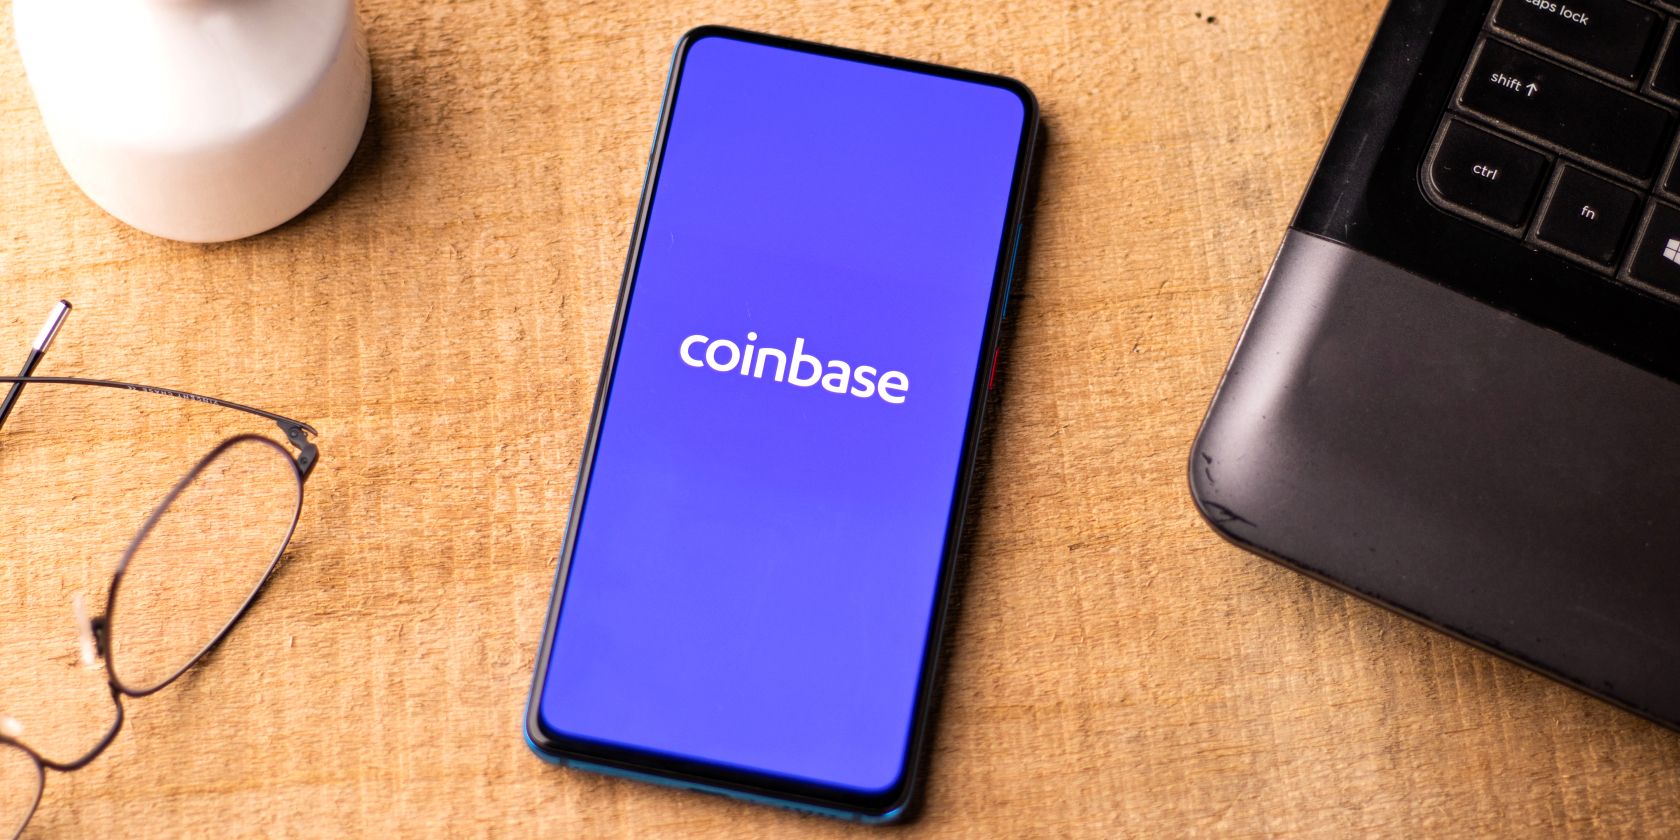 coinbase logo on smartphone